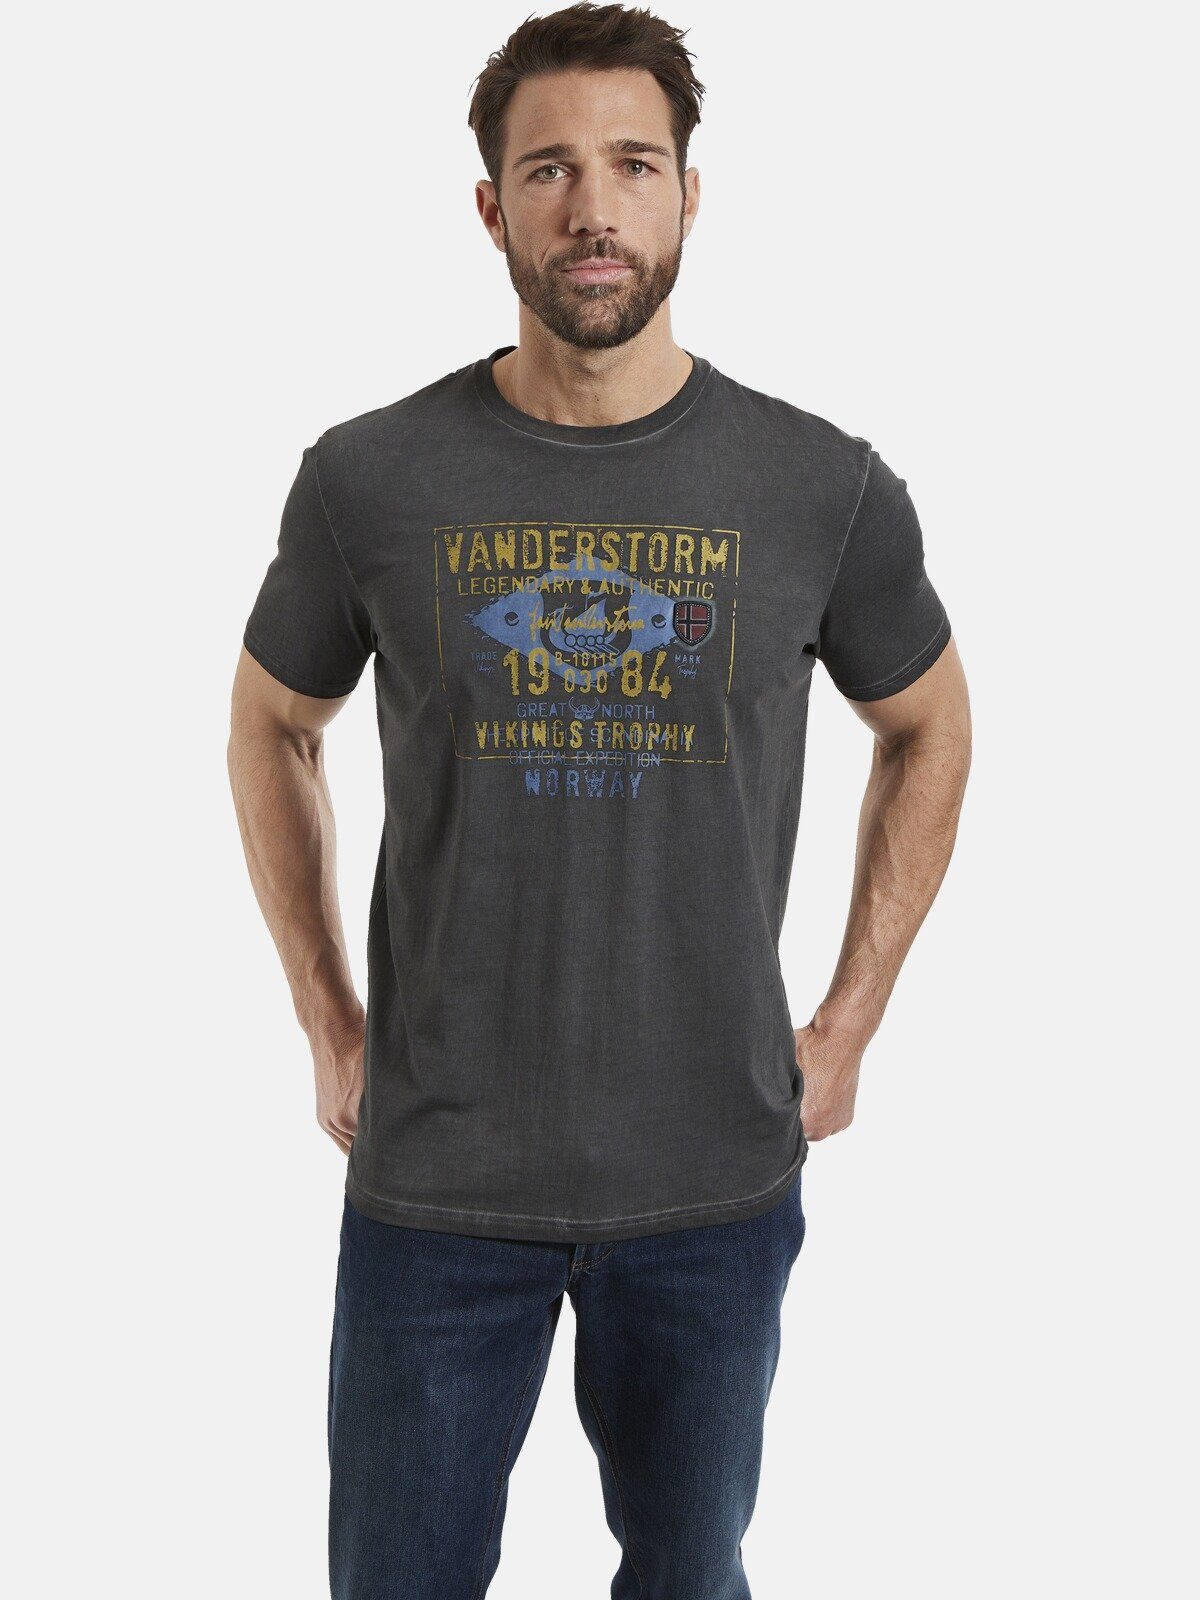 Jan Vanderstorm T-Shirt EELI Unikat durch oil-dyed Färbung dunkelgrau